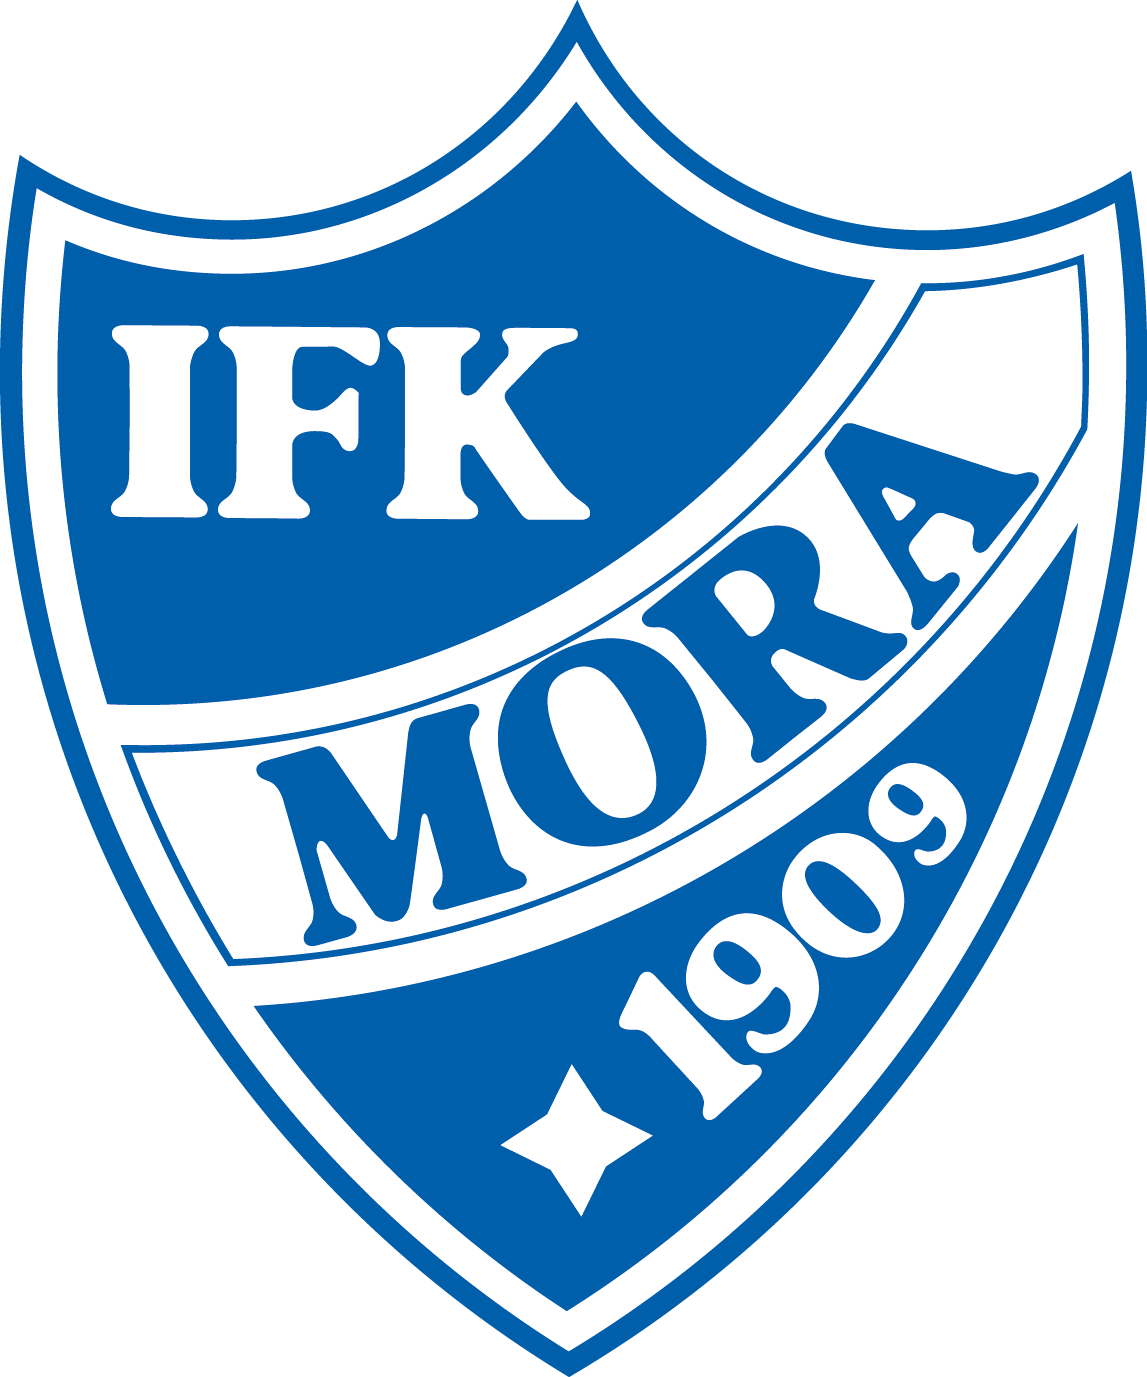 IFK MORA skidklubb